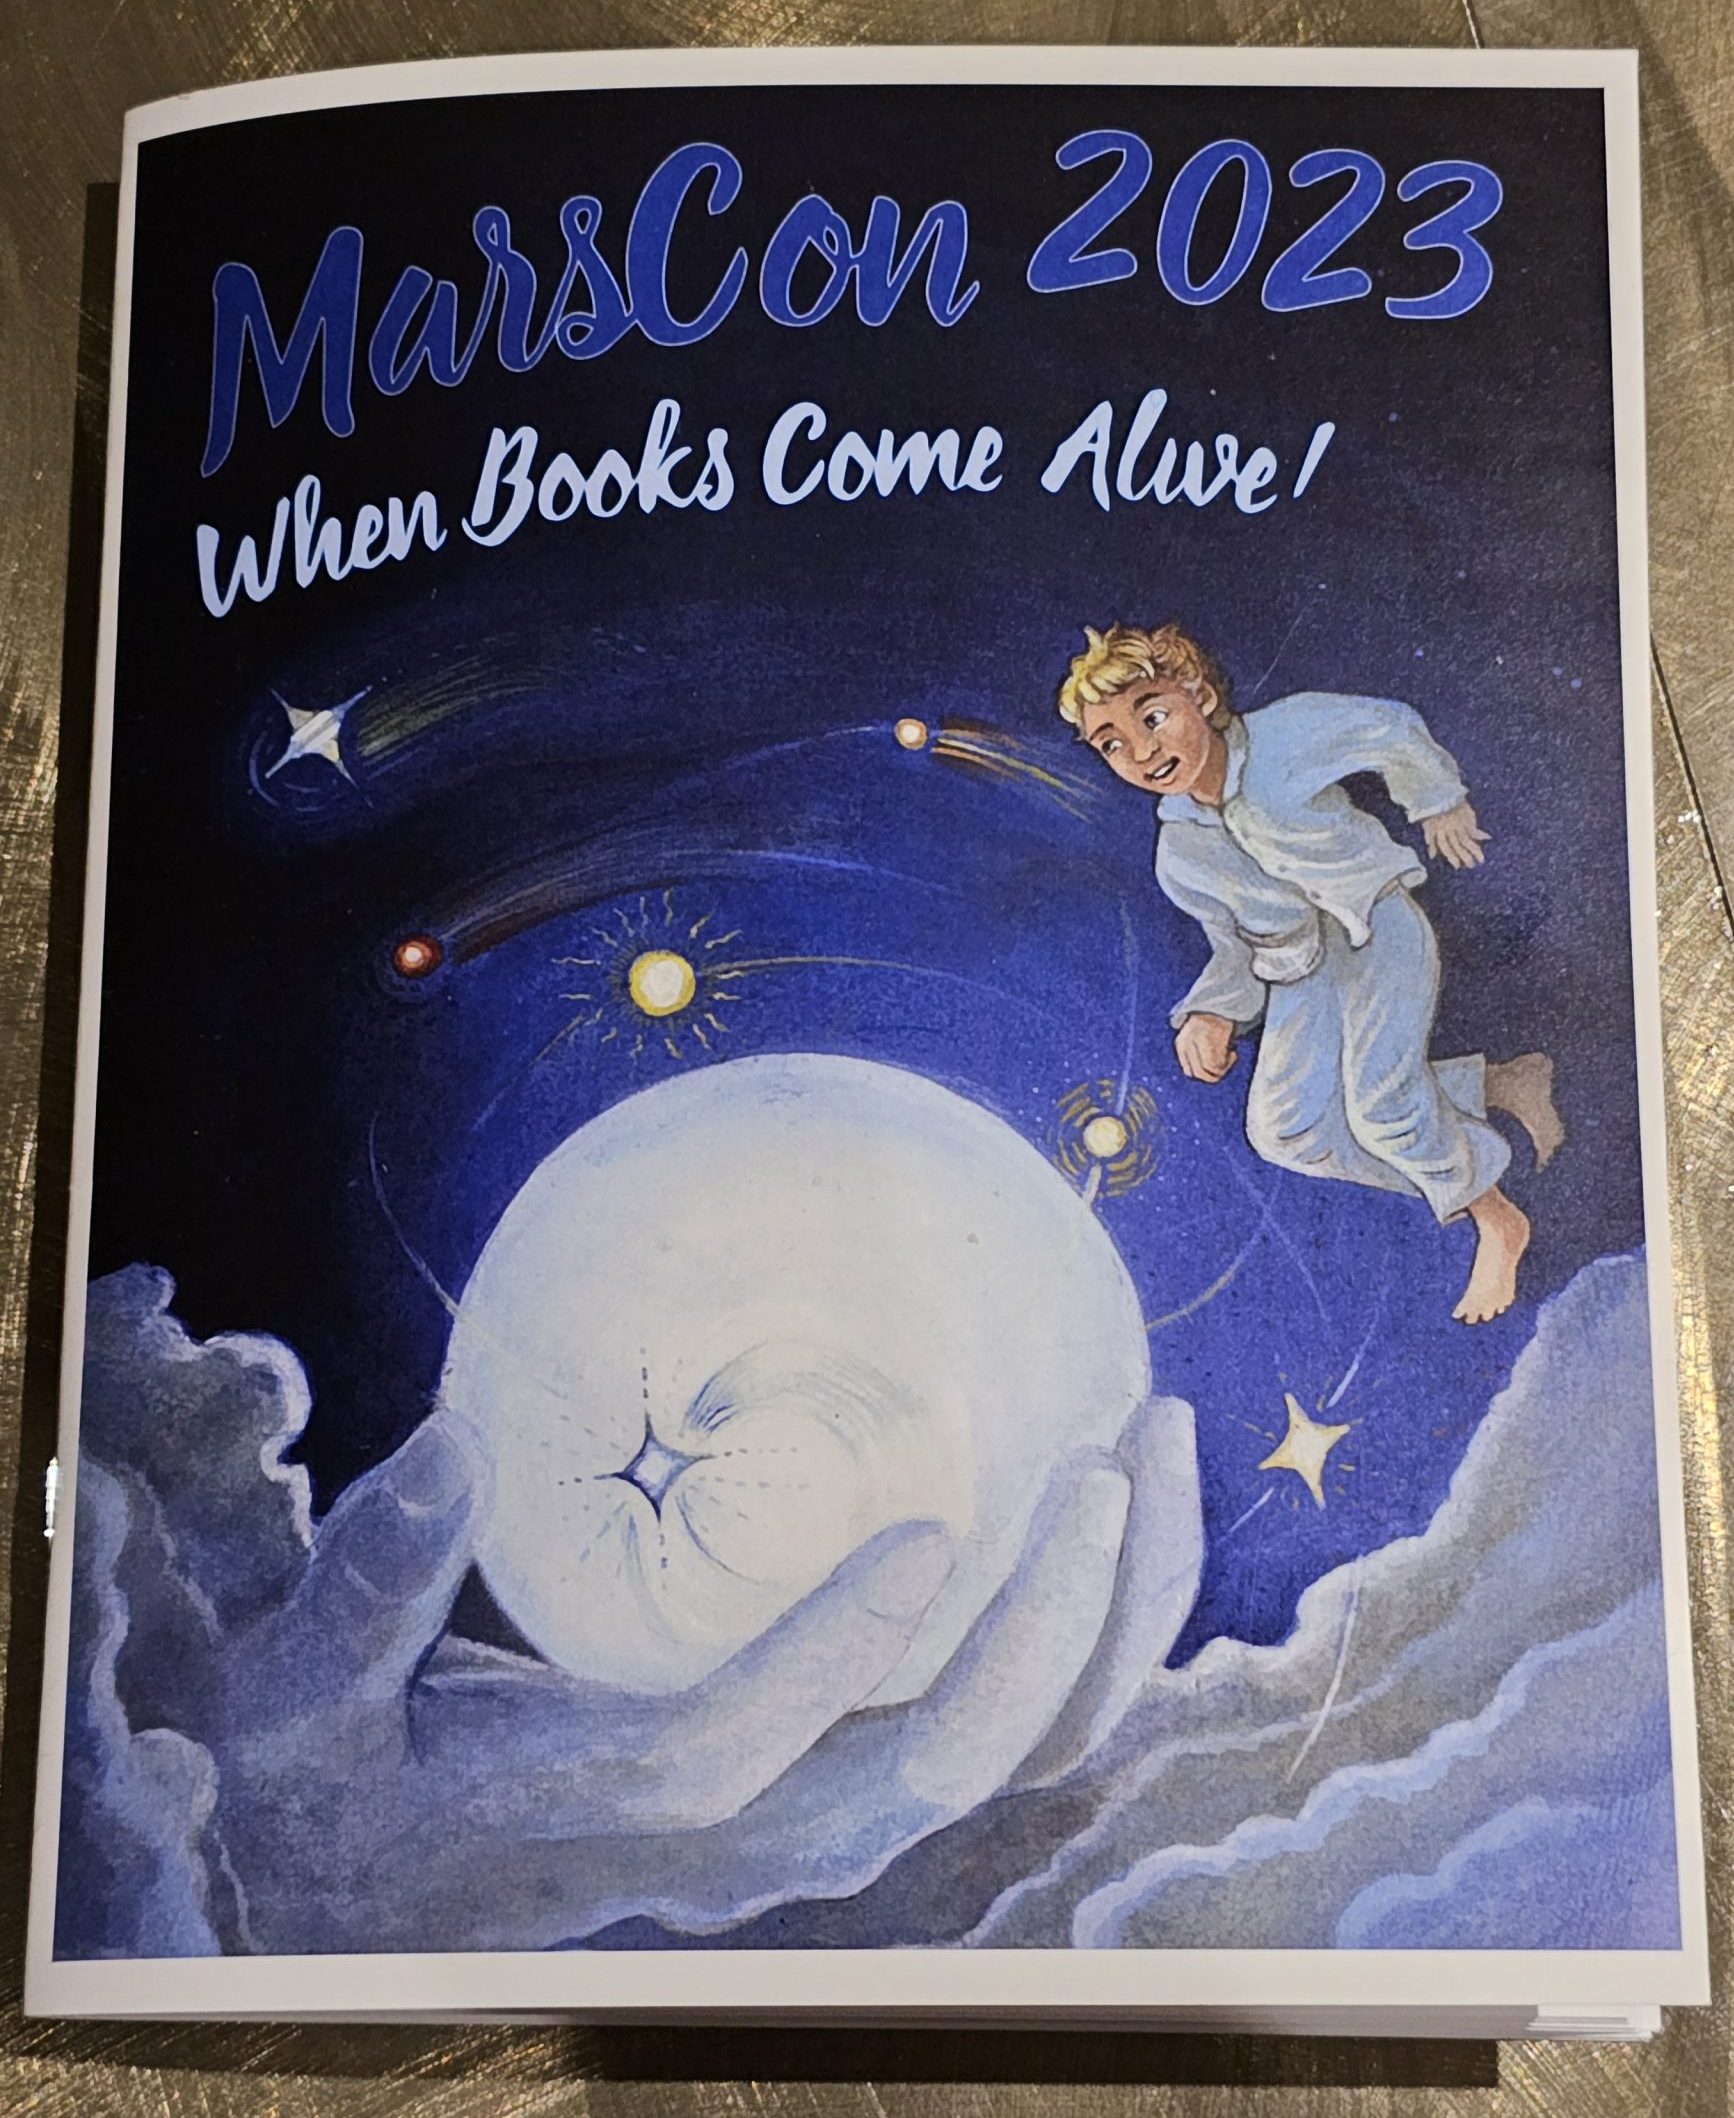 Marscon 2023 Program Cover